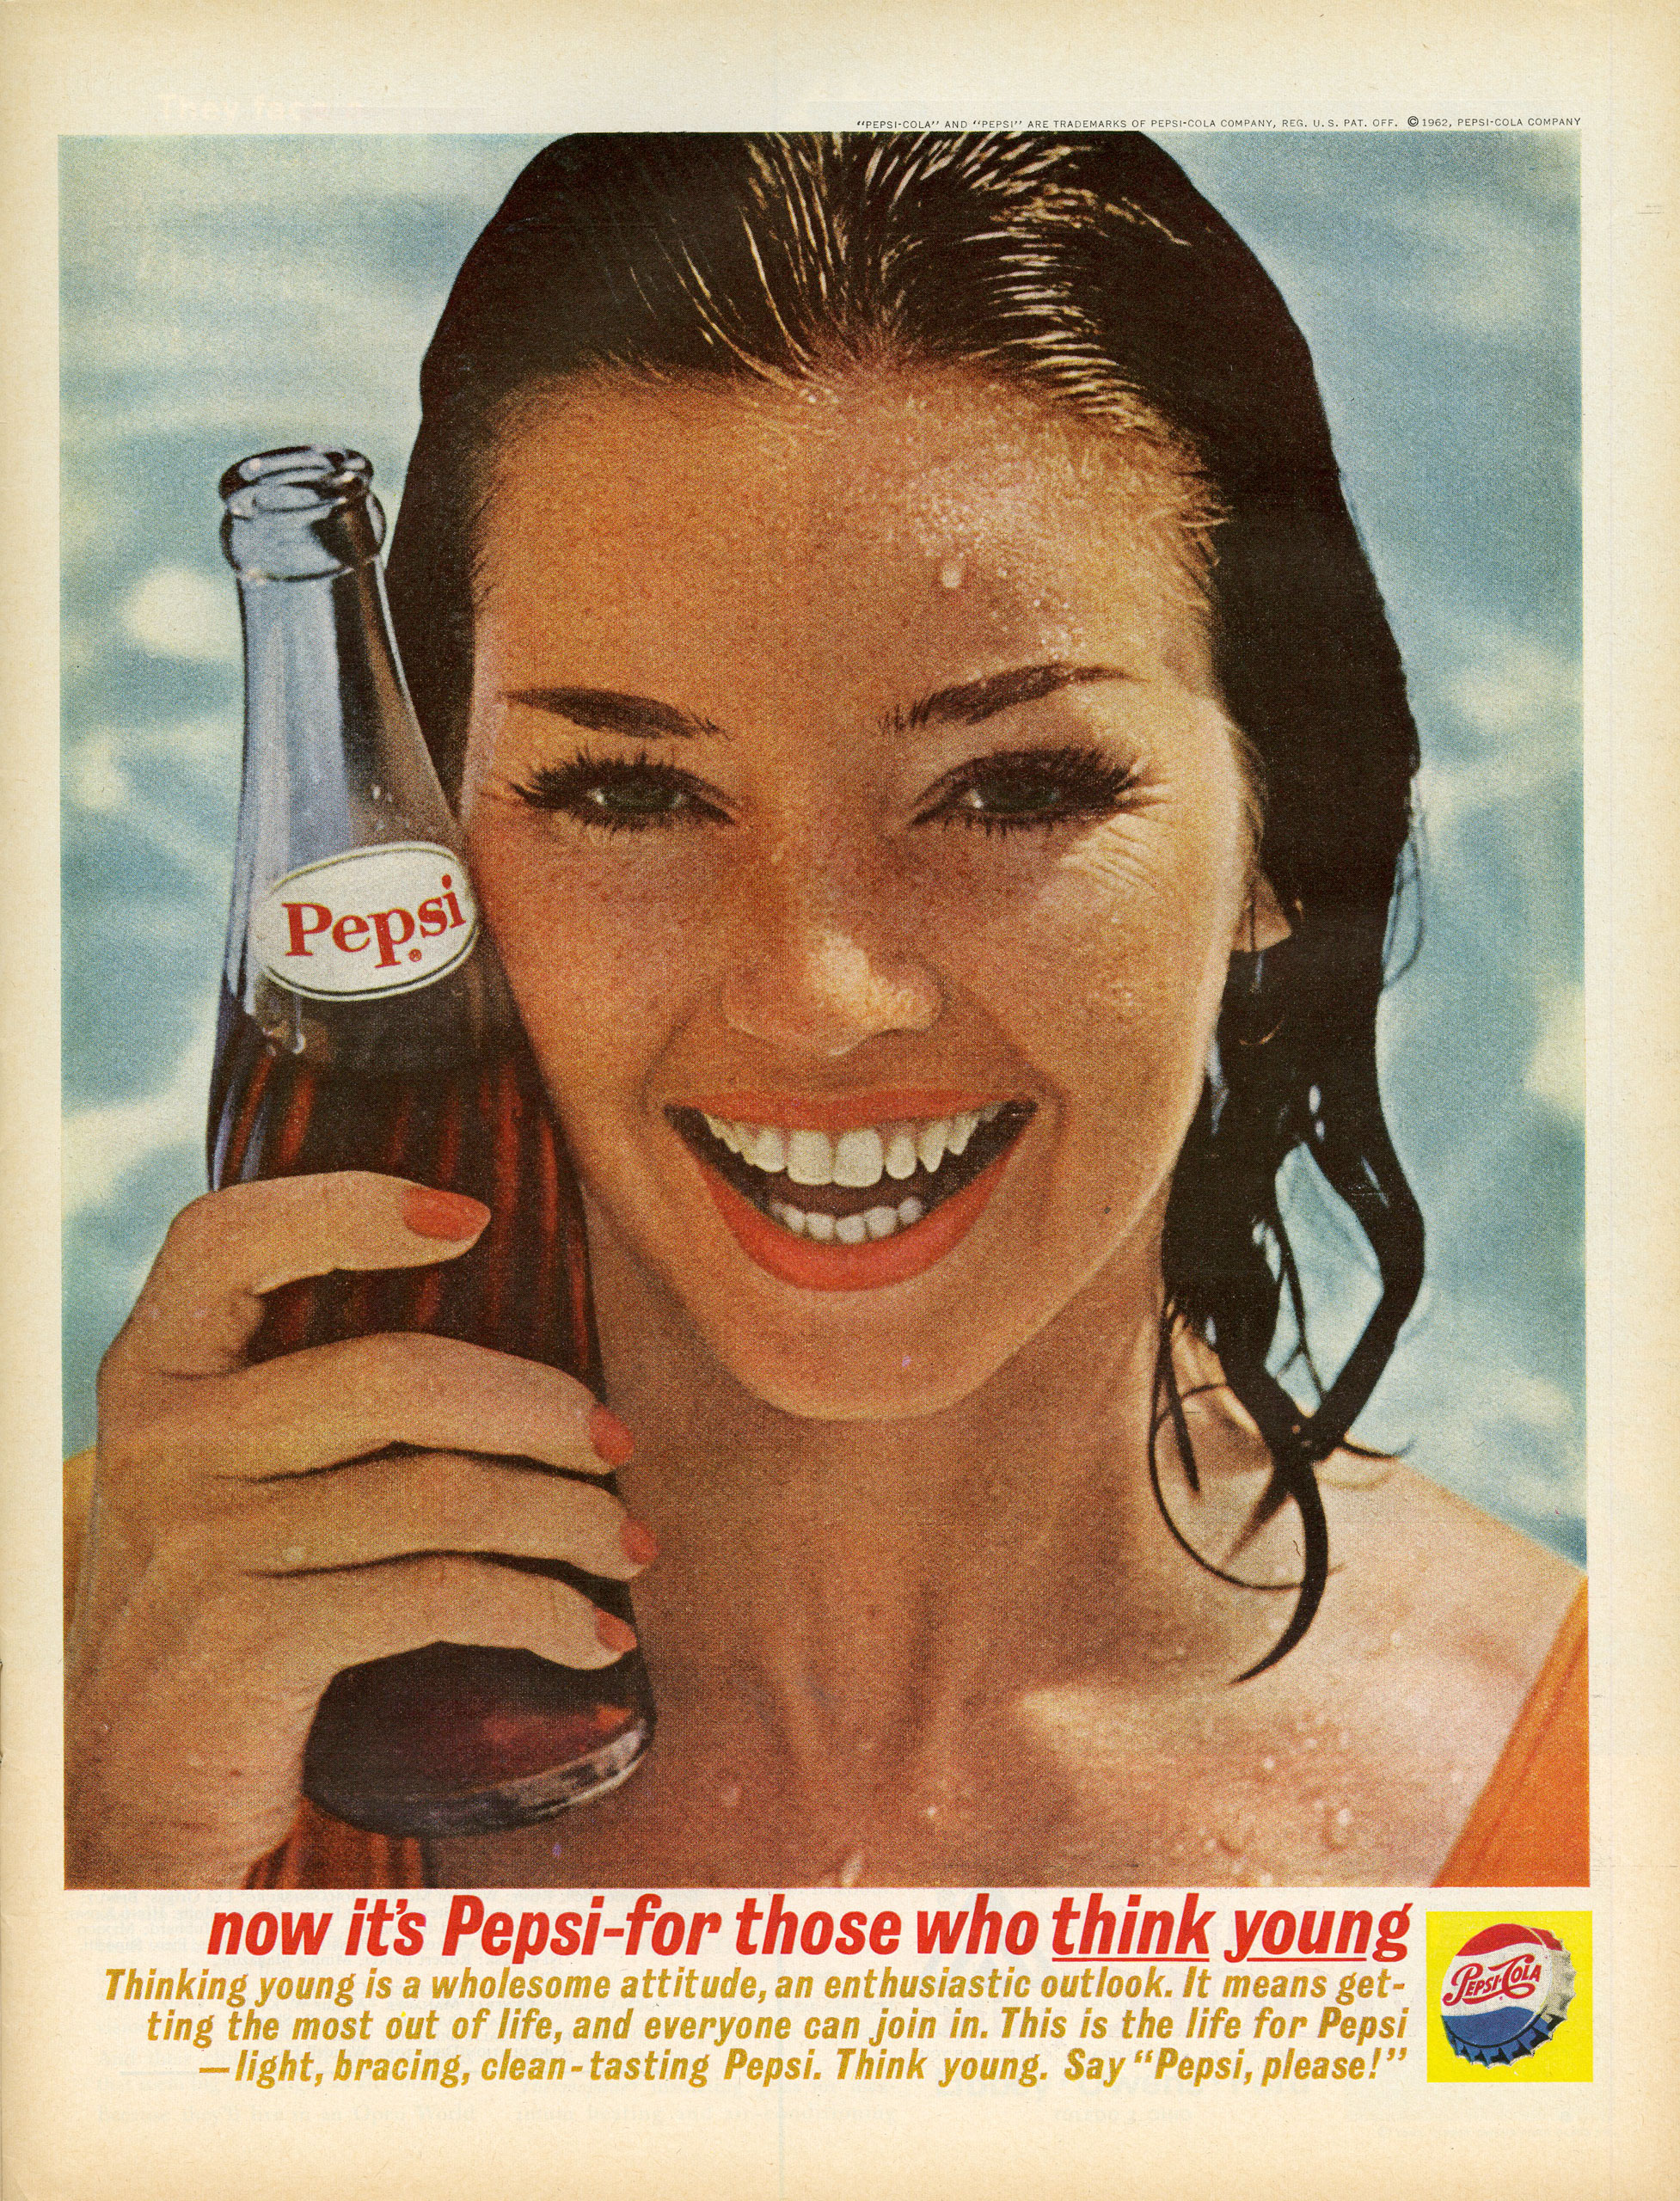 LIFE Magazine Pepsi ad, 1962